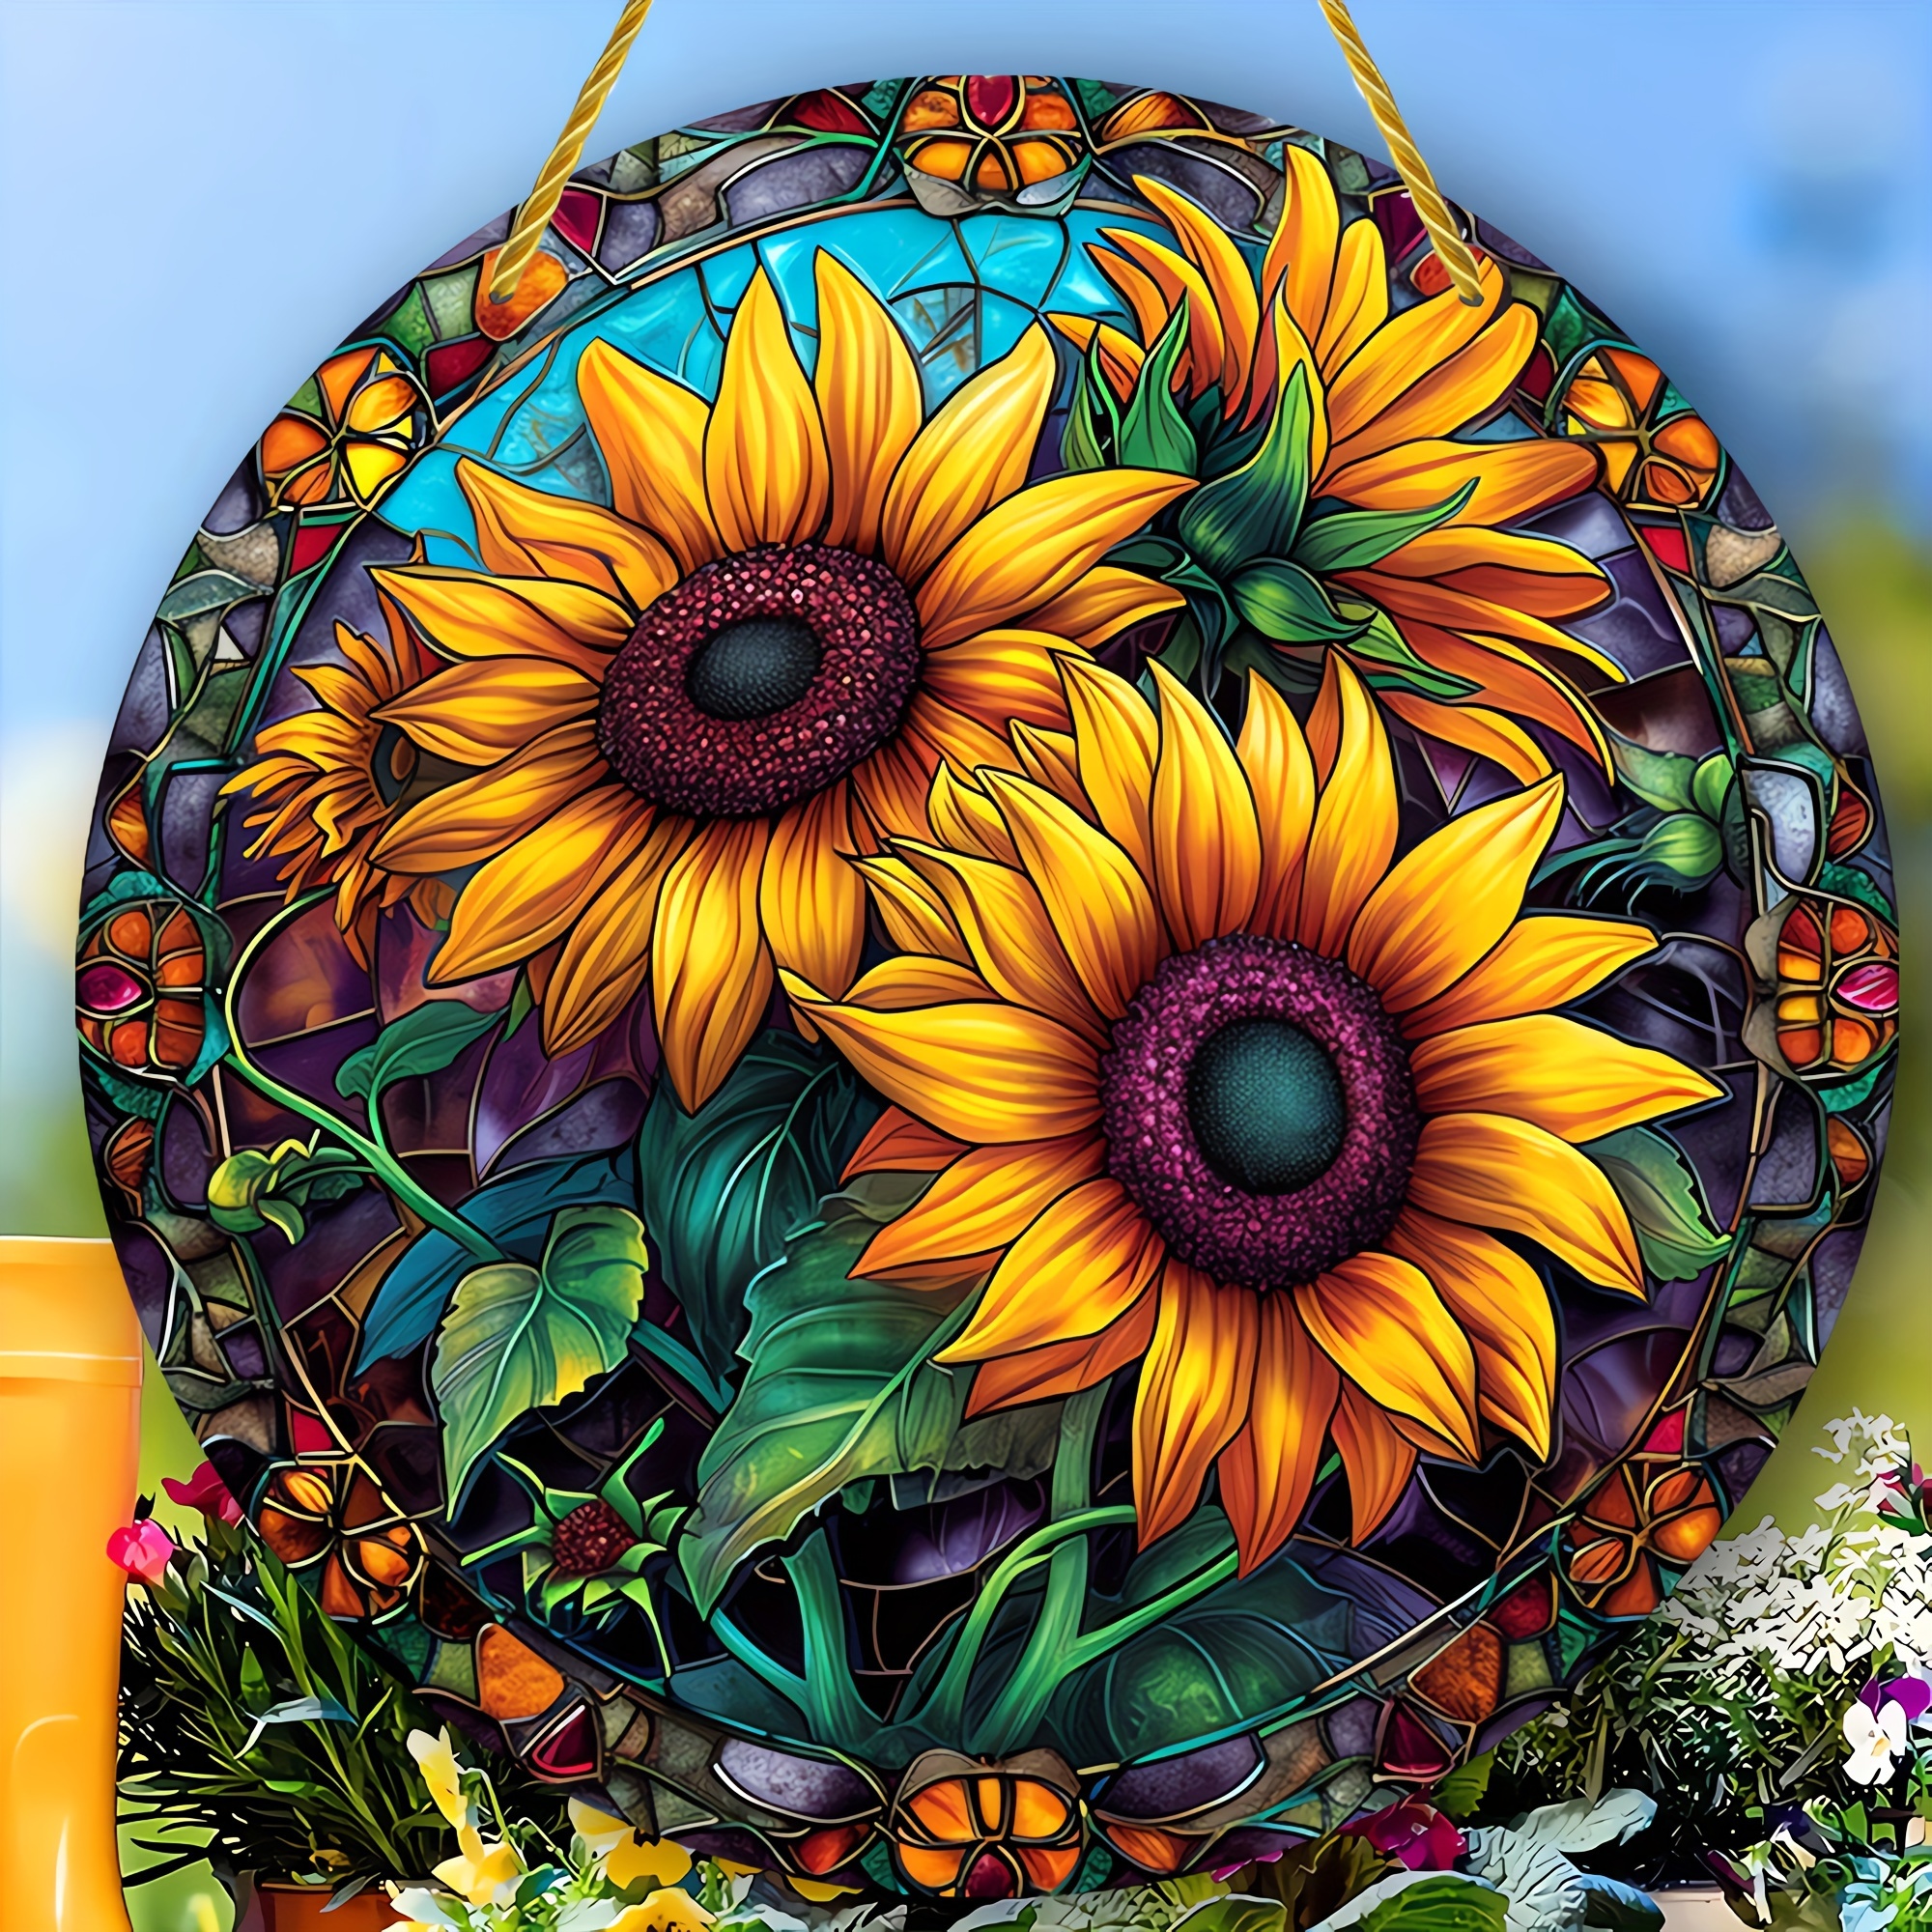 

1pc, Stained Sunflowers Suncatcher For Window (5.9"x5.9"/15cmx15cm), Home Decor, Garden Decor, Farmhouse Decor, Housewarming, Friend Gifts For Women, Gifts Under 10 Dollars